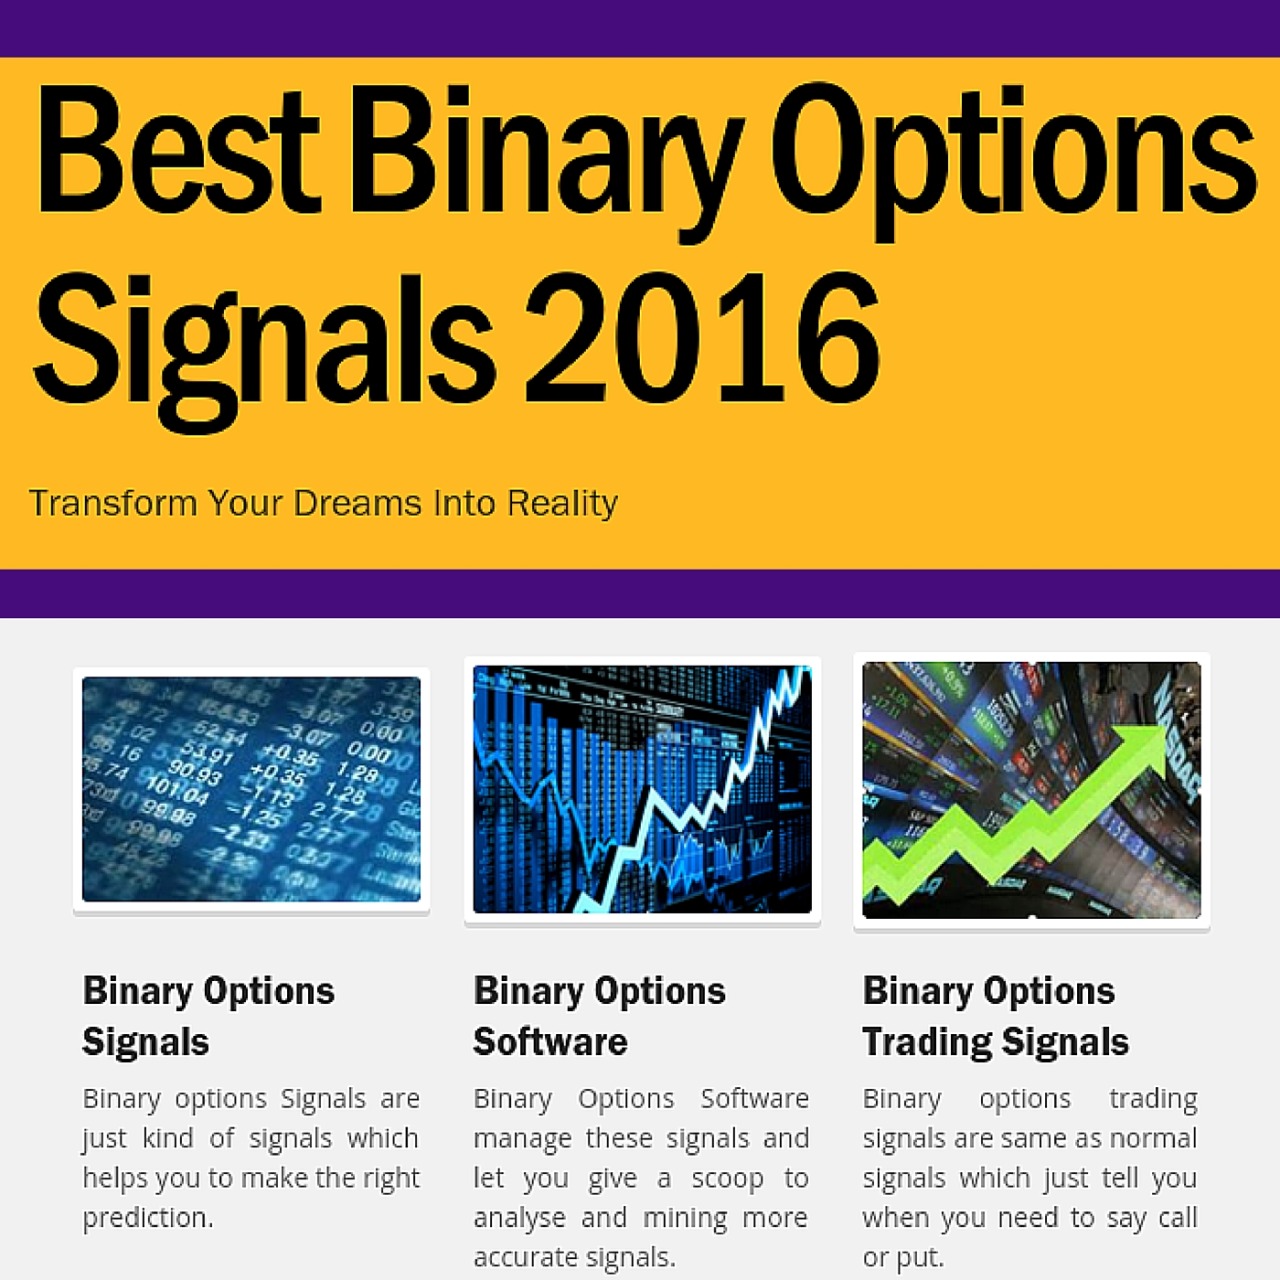 Yes binary options